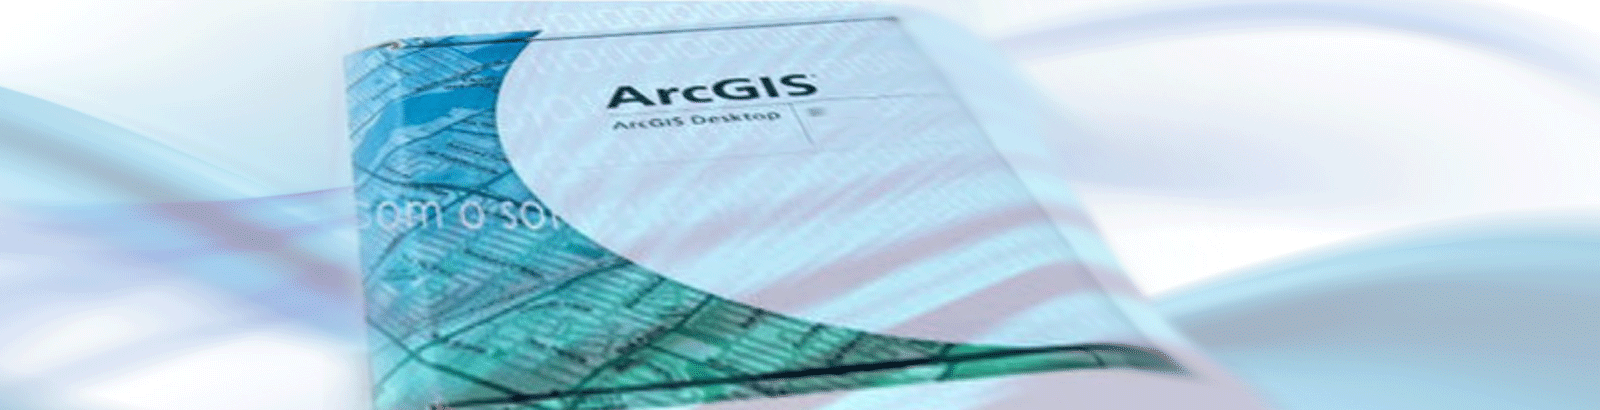 Arcgis - Unicamp assina contrato para licenciamento corporativo educacional